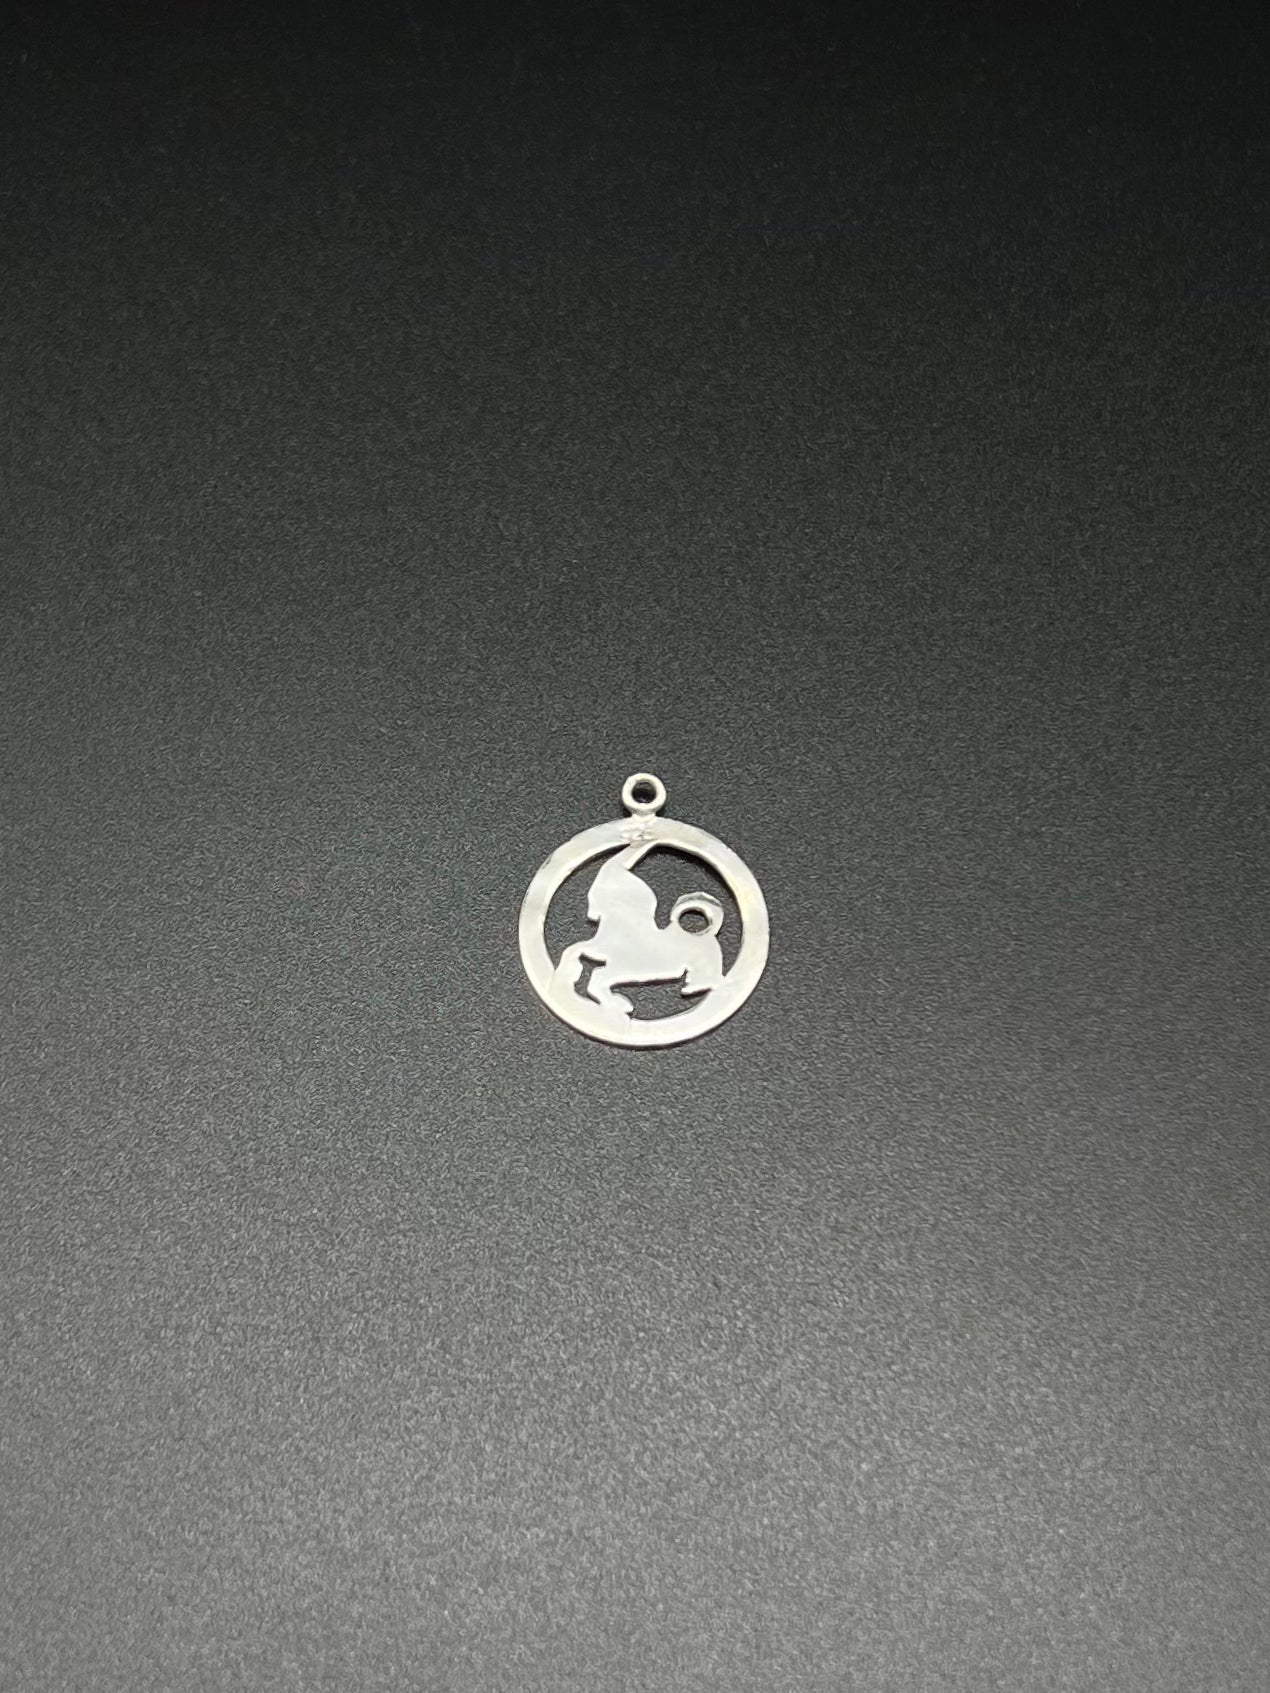 Capricorn necklace -silver925